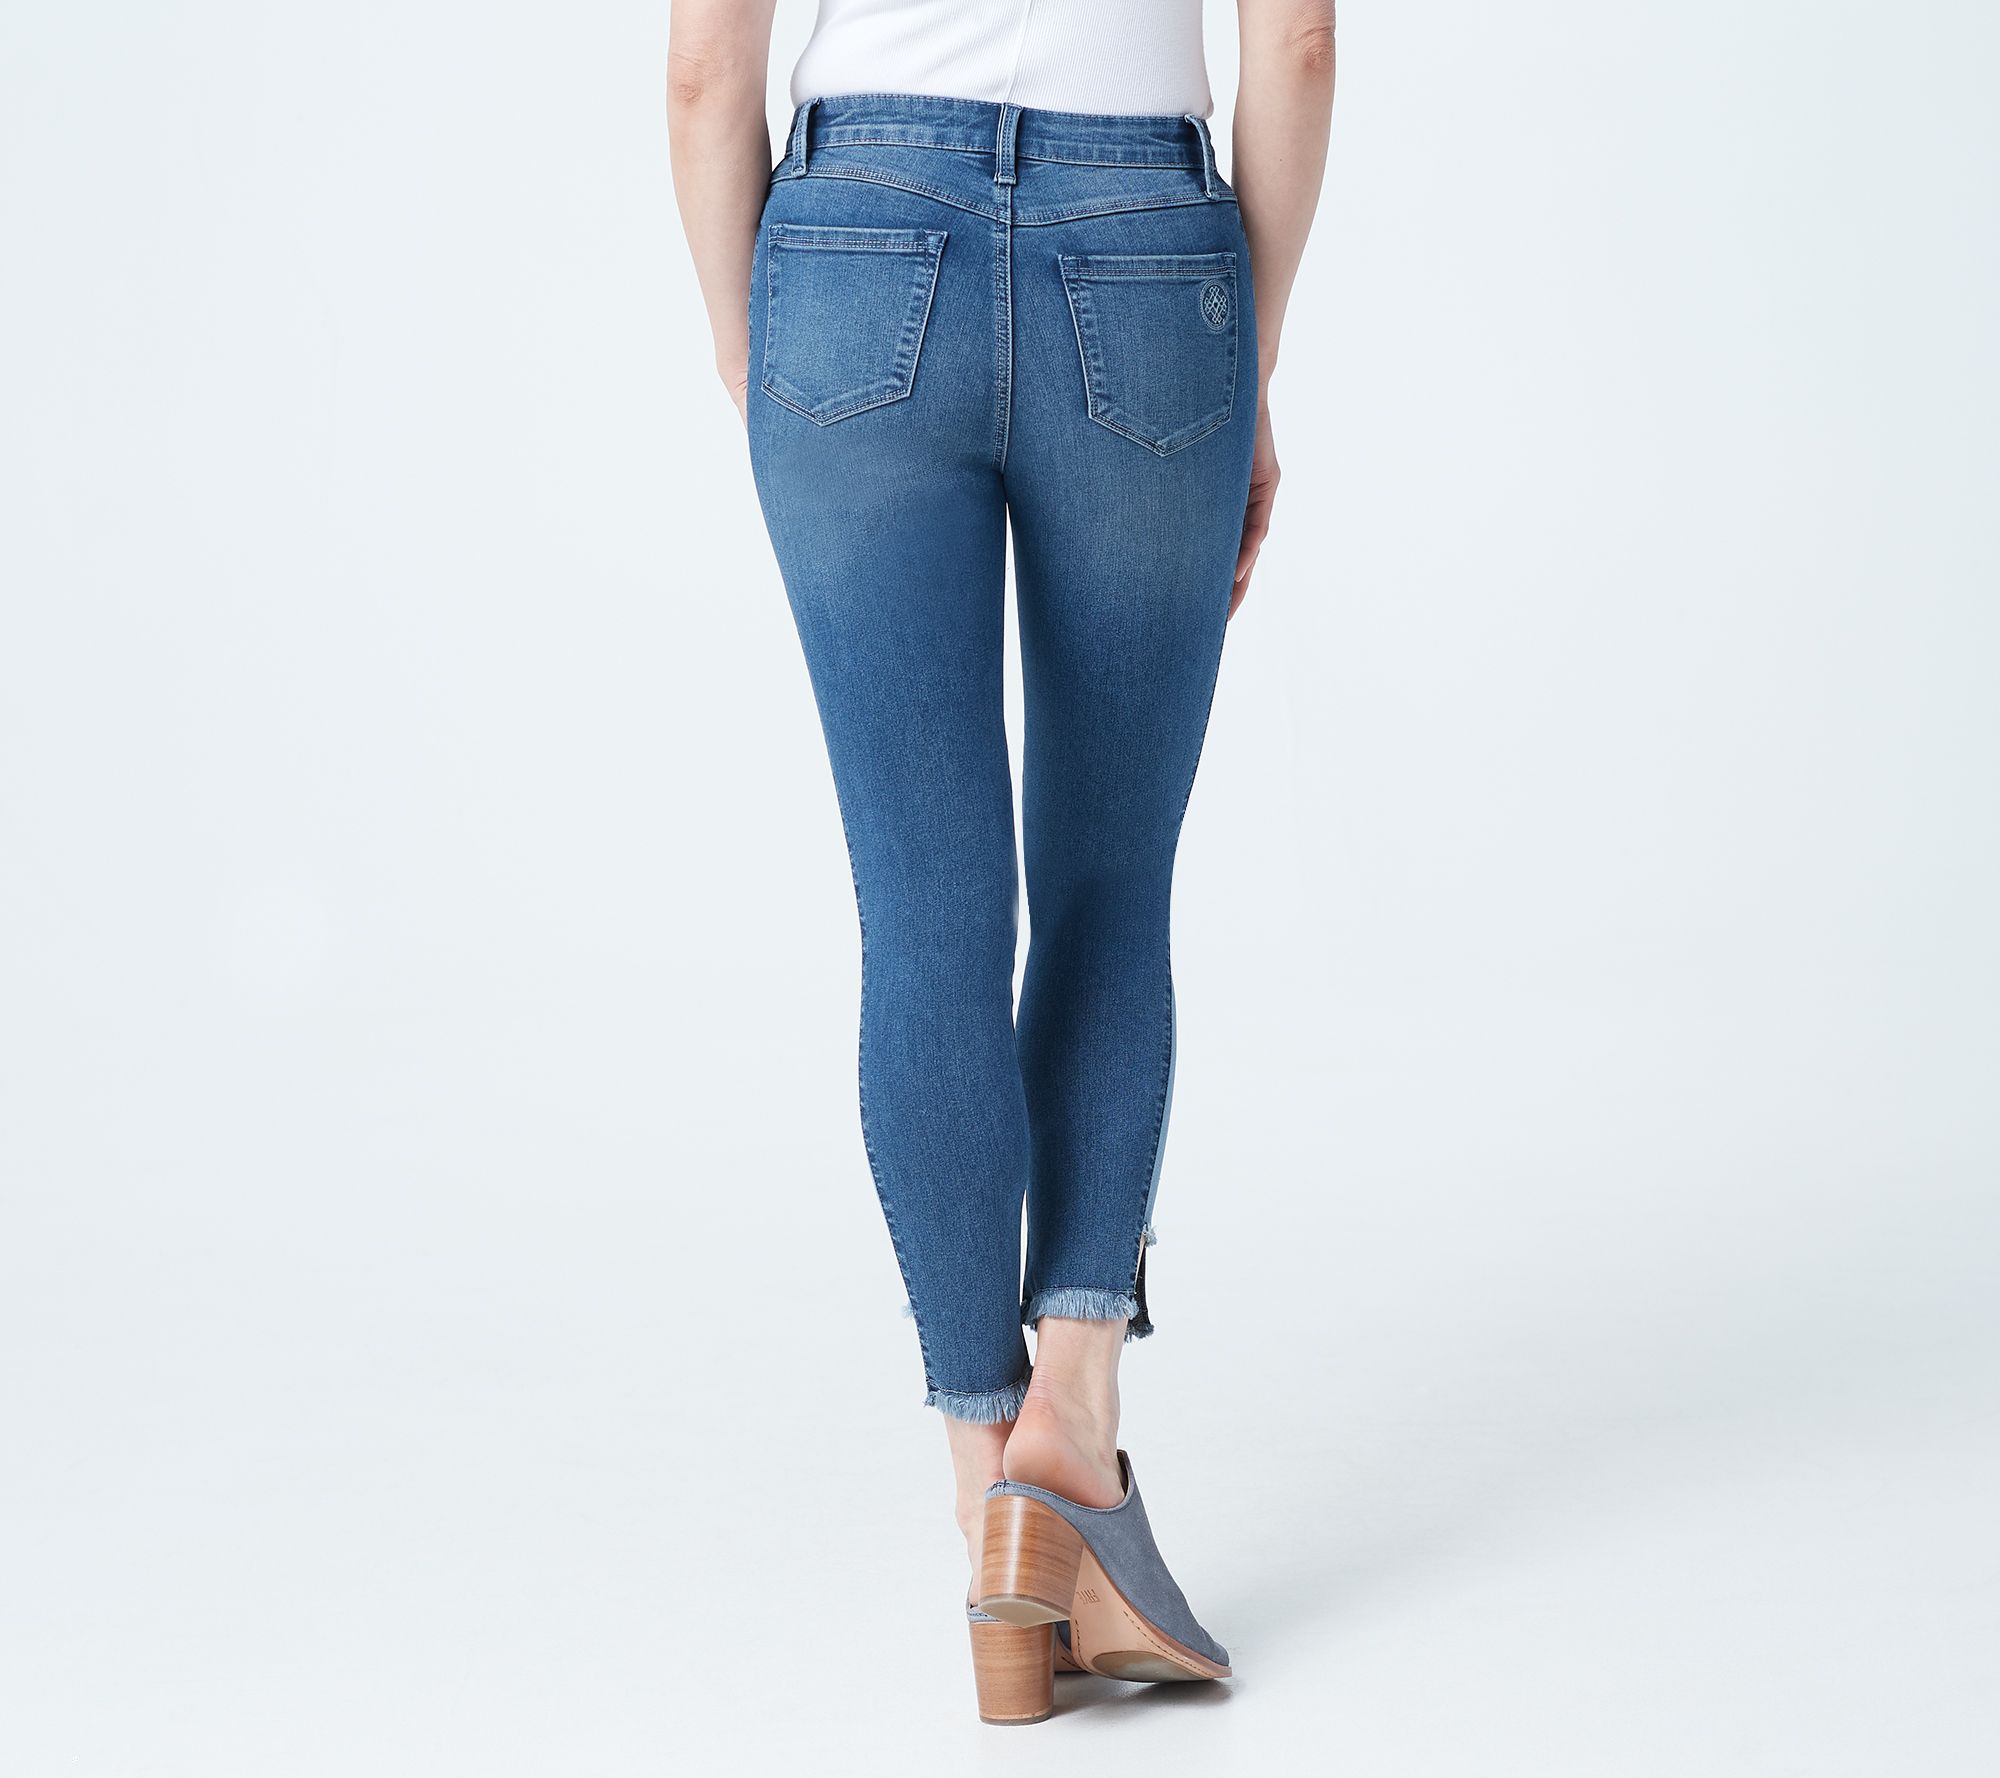 Laurie Felt Silky Denim Side Stripe Zip Fly Jeans Jeans - QVC.com